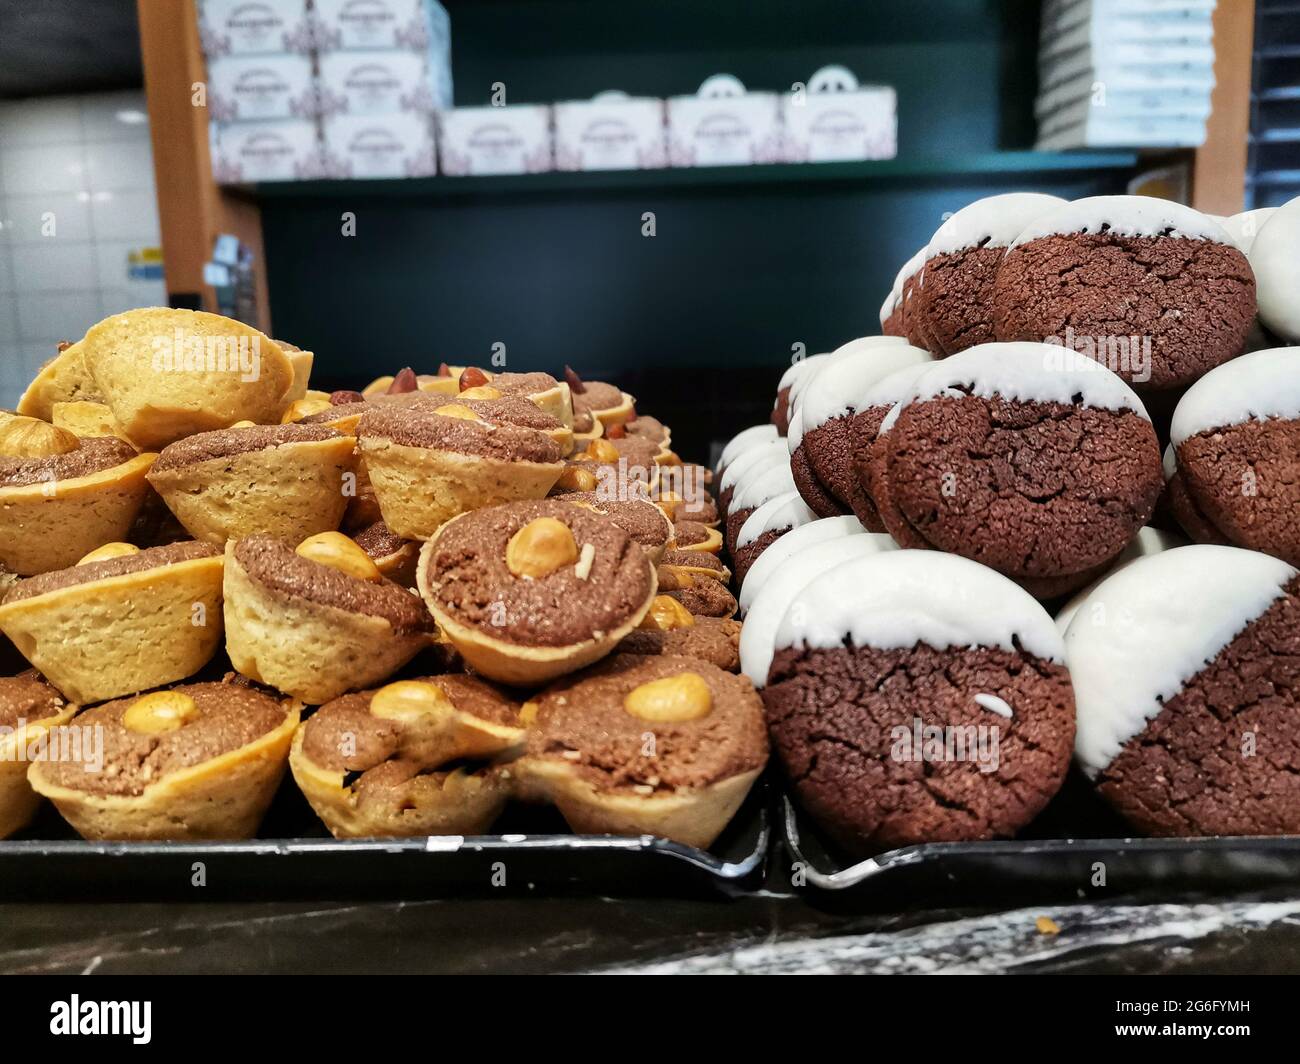 Cookie. Chocolate and Hazelnut cakes. Patisserie Stock Photo